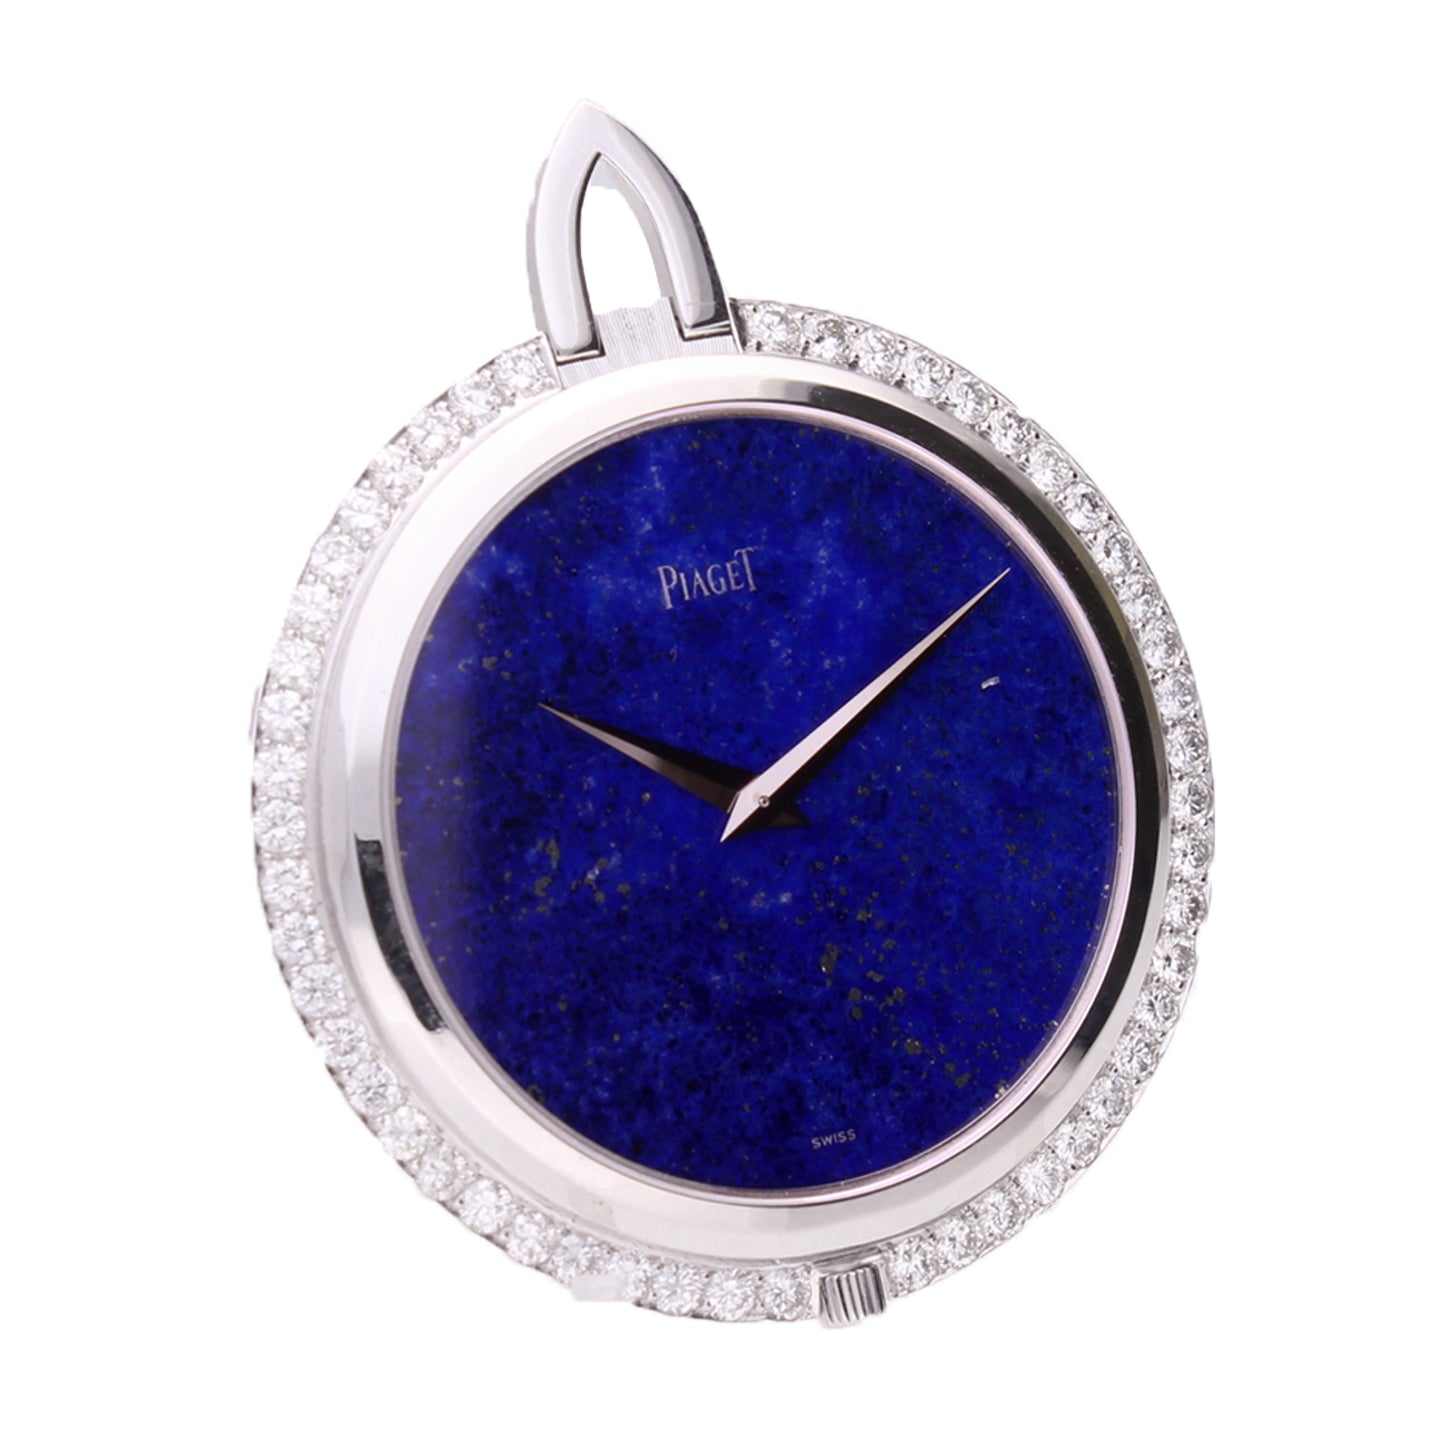 18ct white gold Piaget pocket watch with Lapis Lazuli dial & diamond set bezel. Made 1969